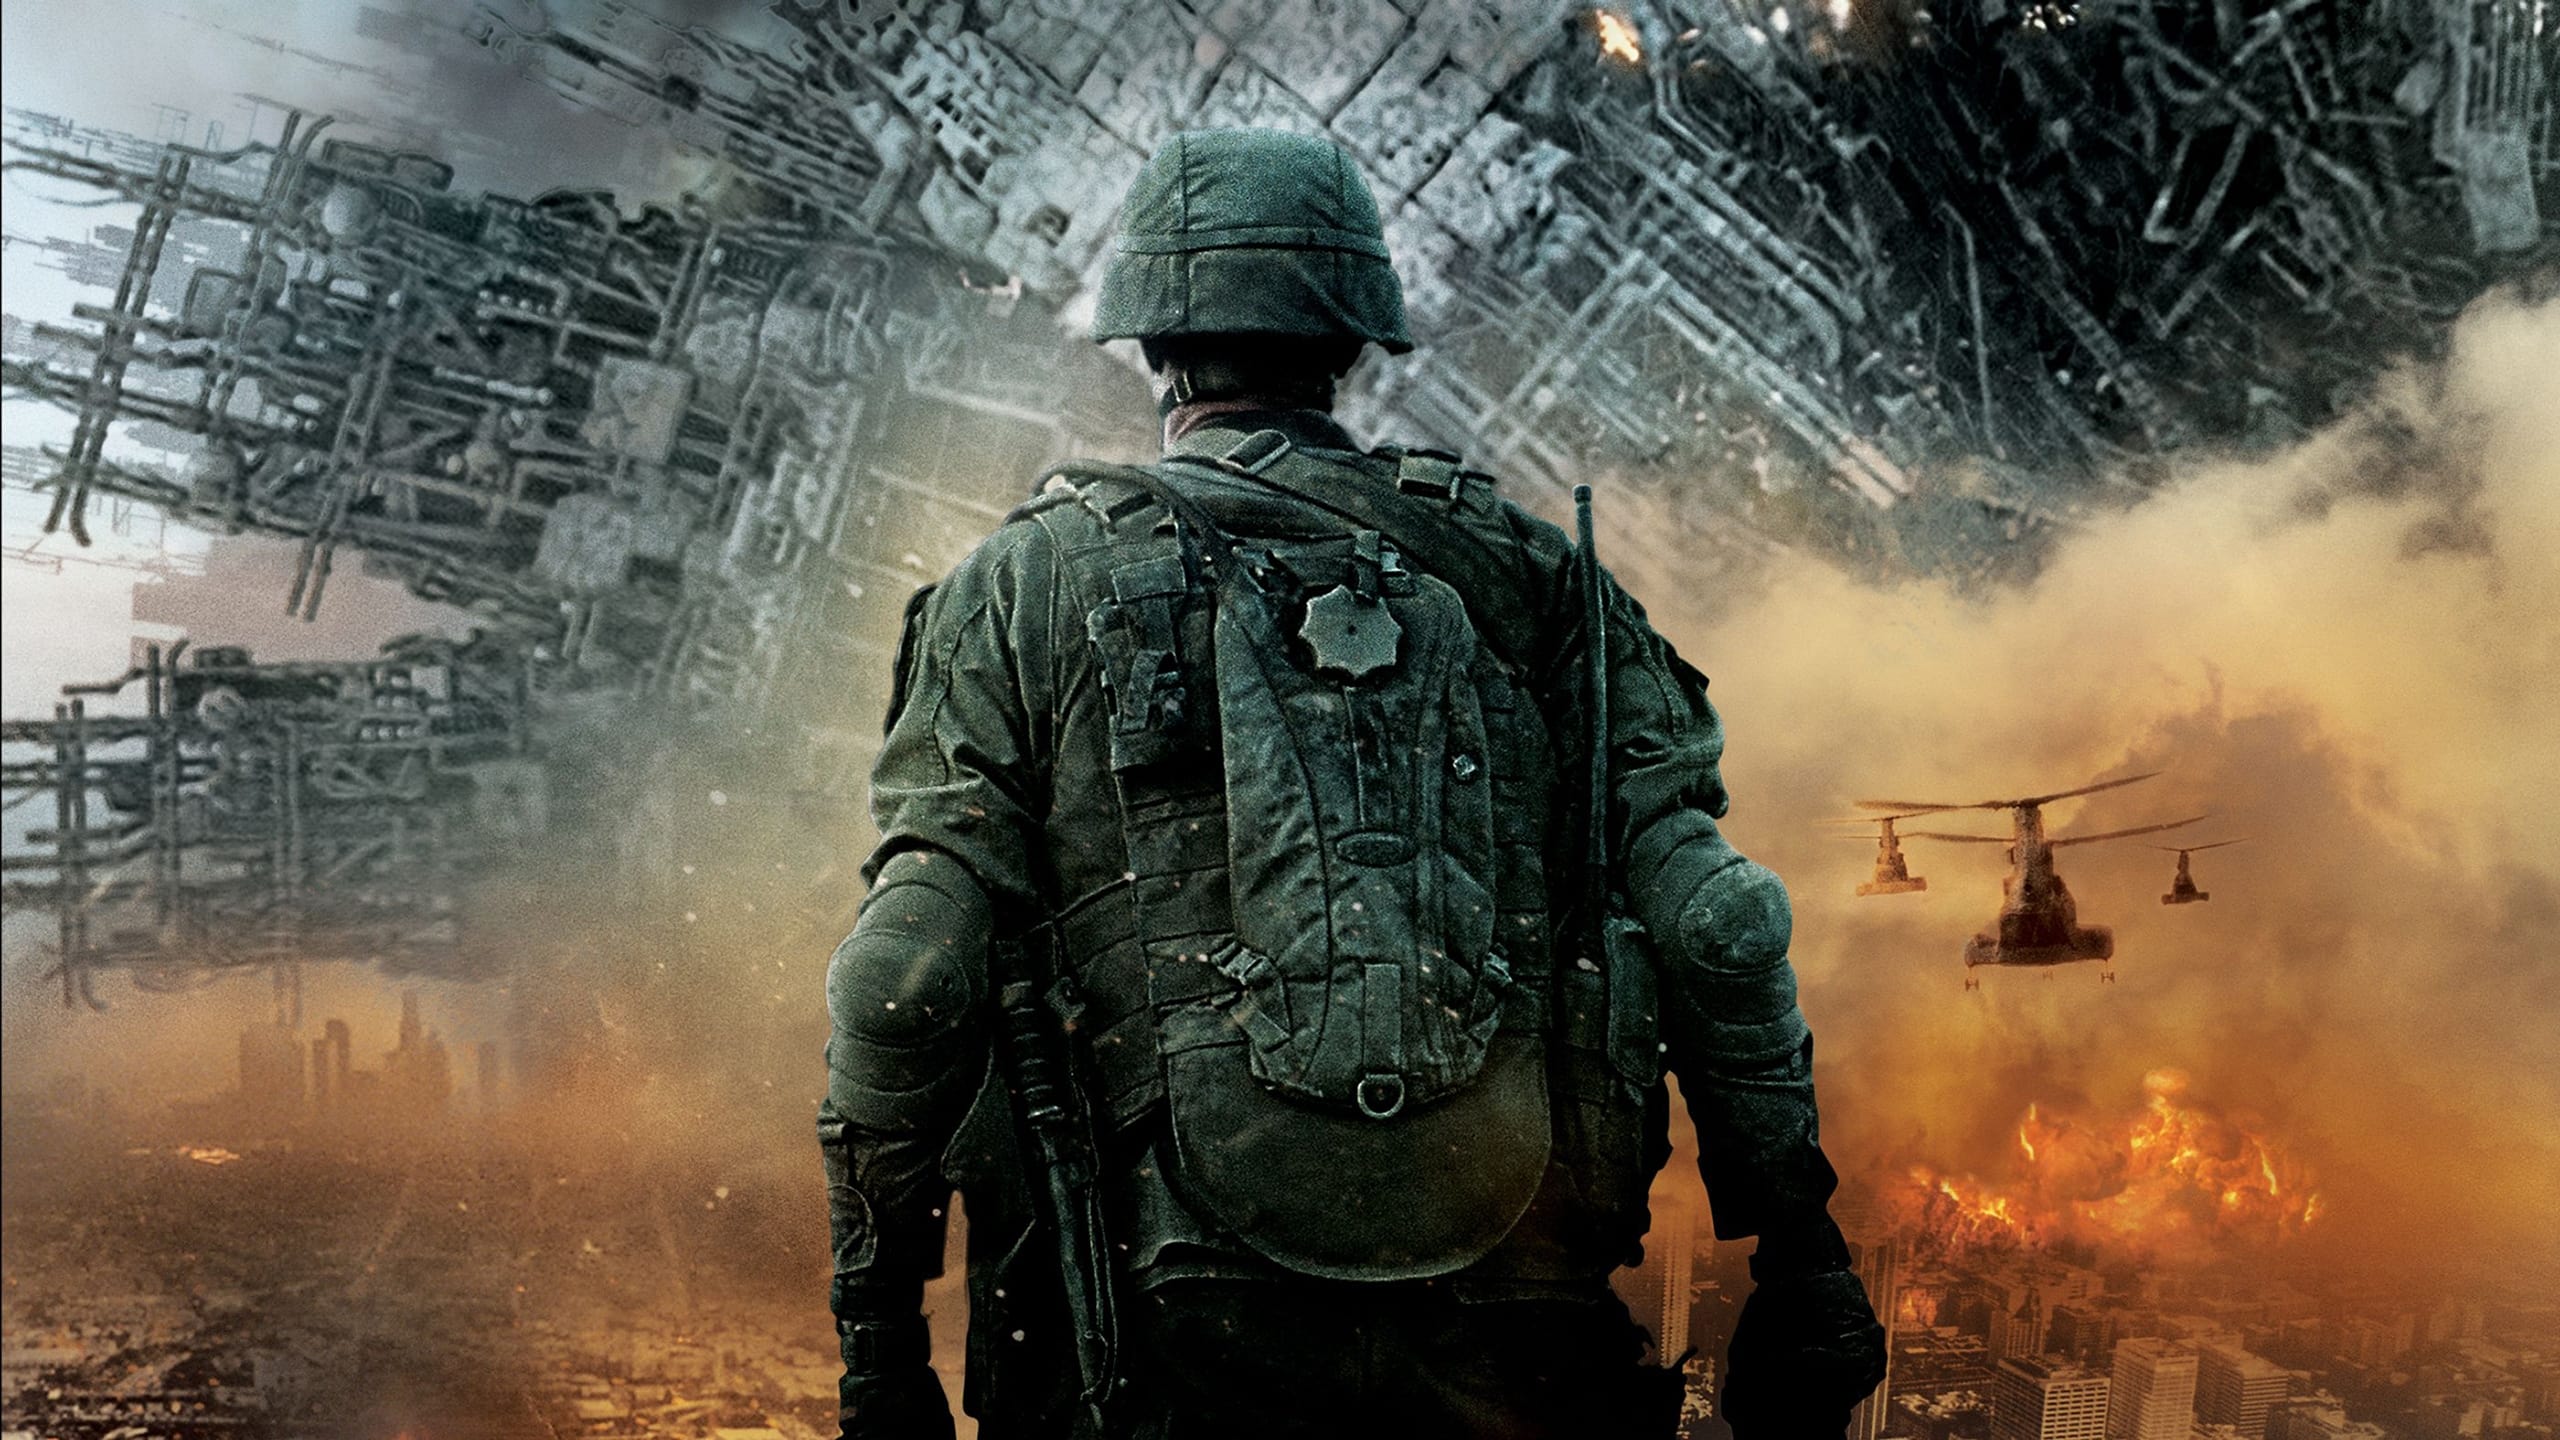 Poster Phim Đại Chiến Los Angeles (Battle: Los Angeles)